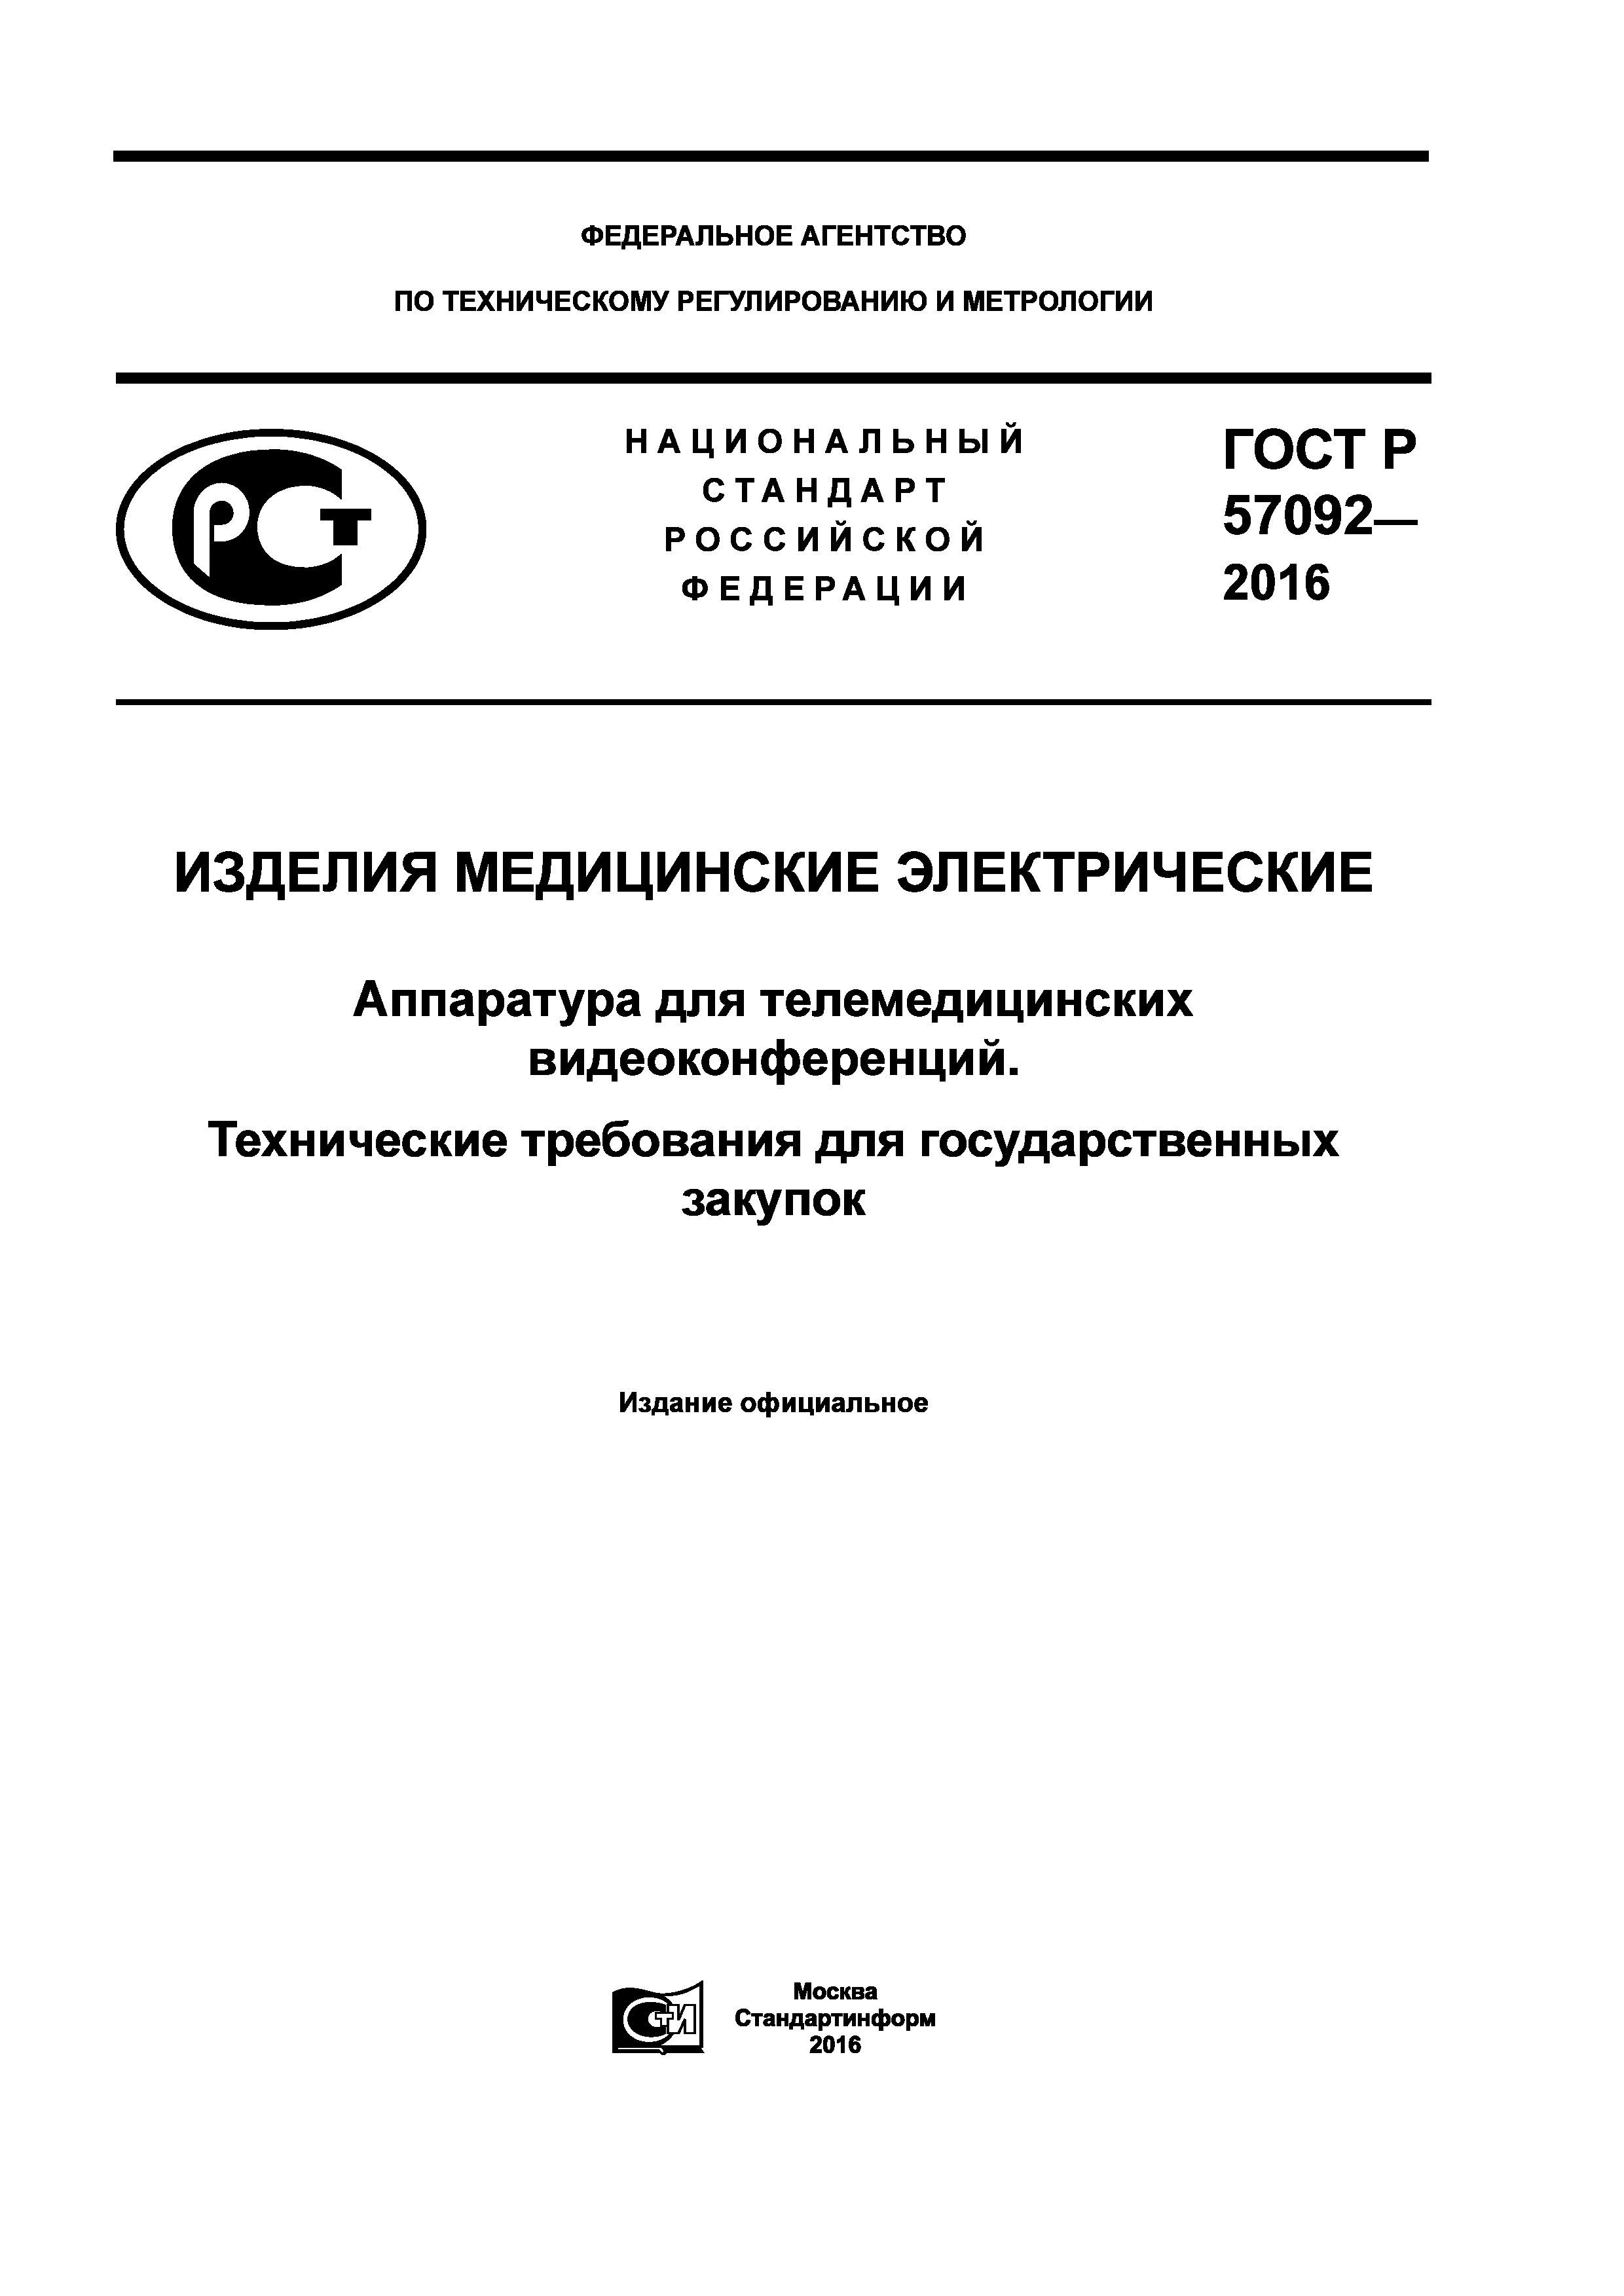 ГОСТ Р 57092-2016